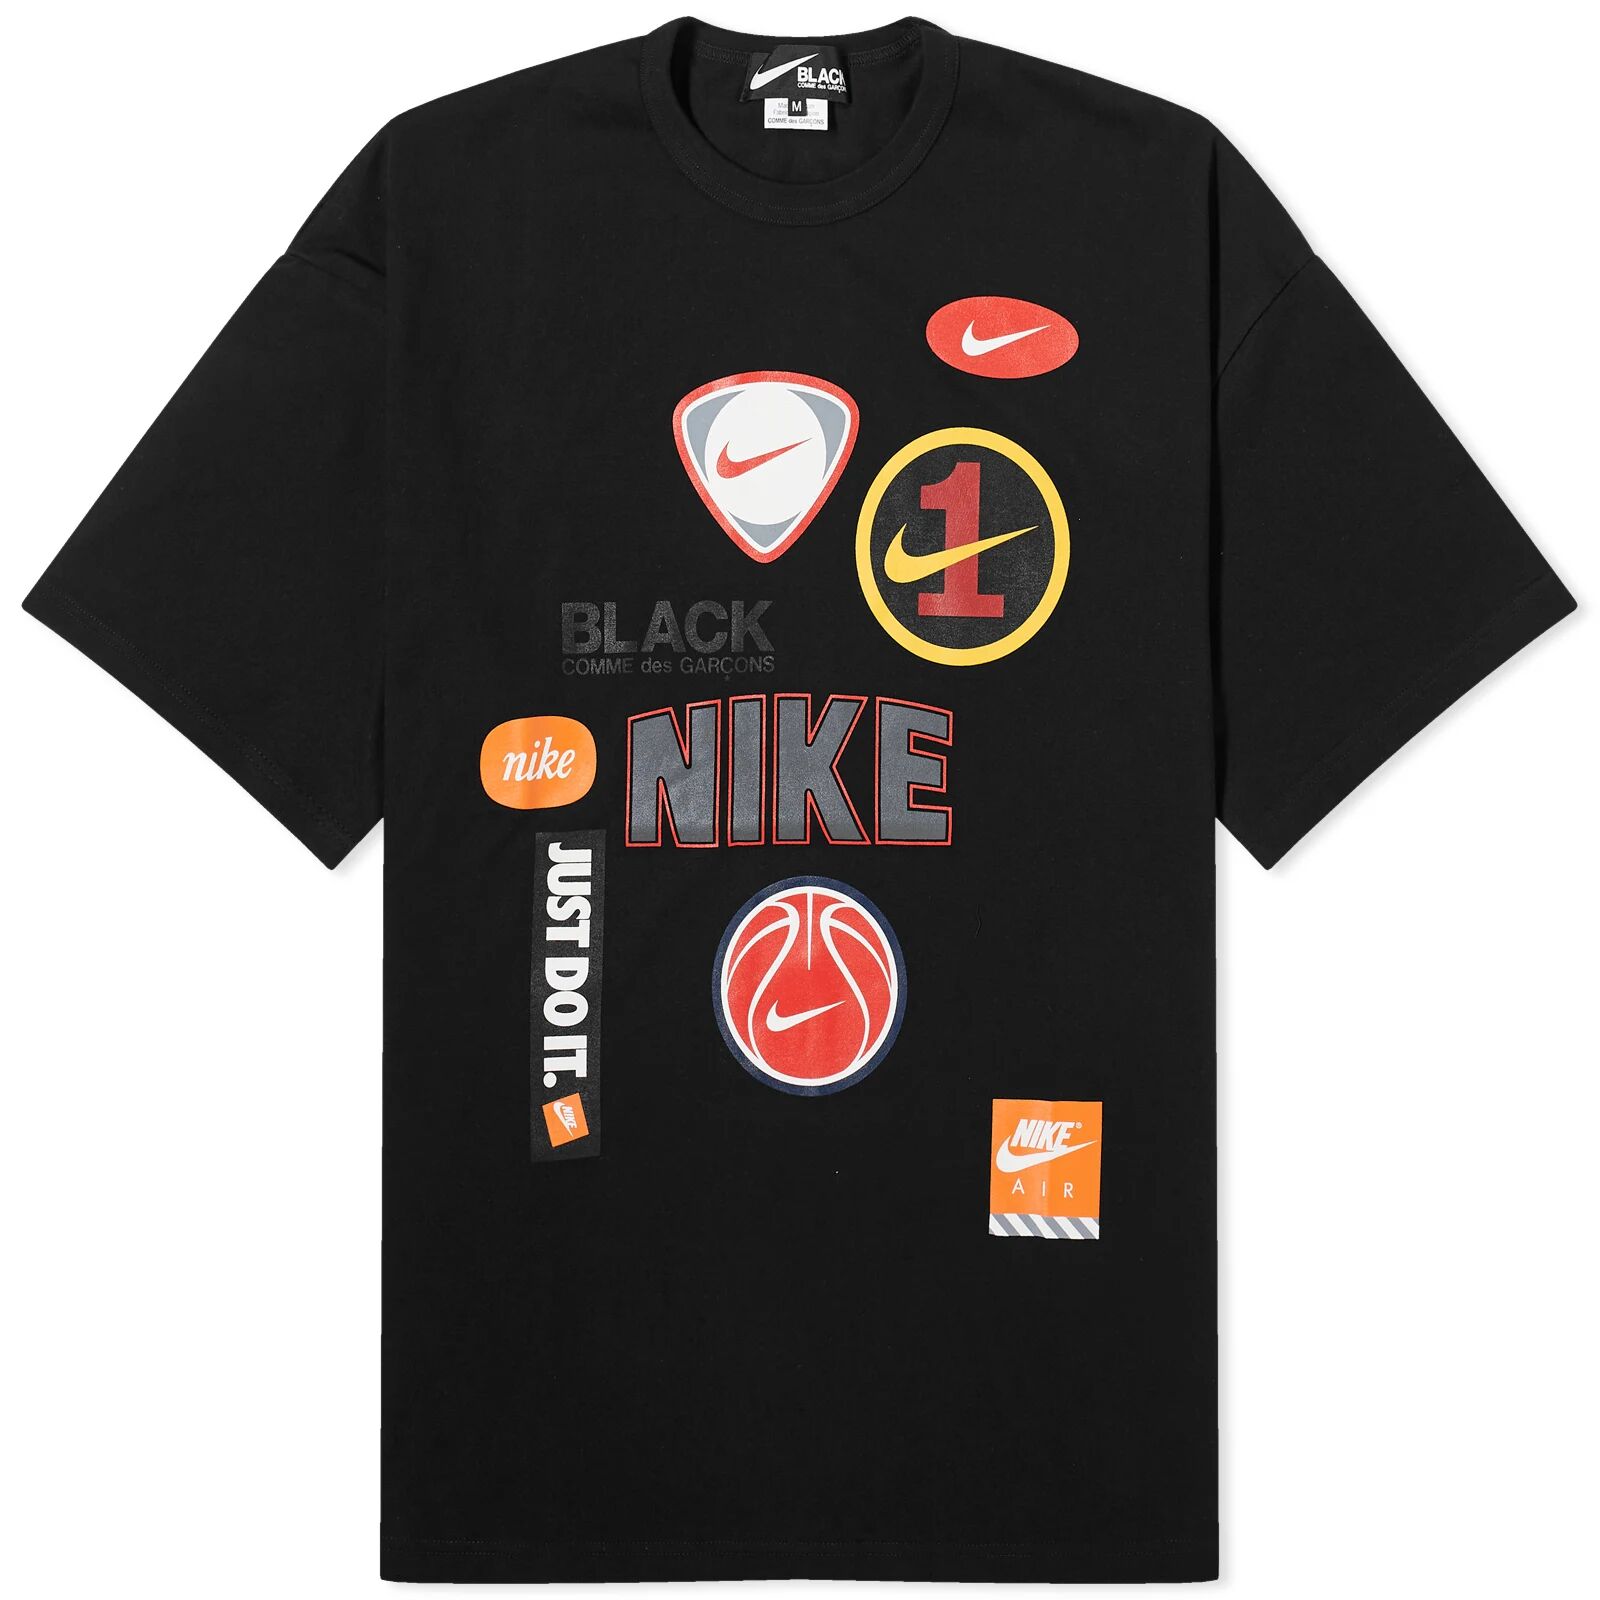 Comme des Garçons Black Comme des Garçons Men's x Nike Oversized Multi Logo Print Te in Black, Size Small